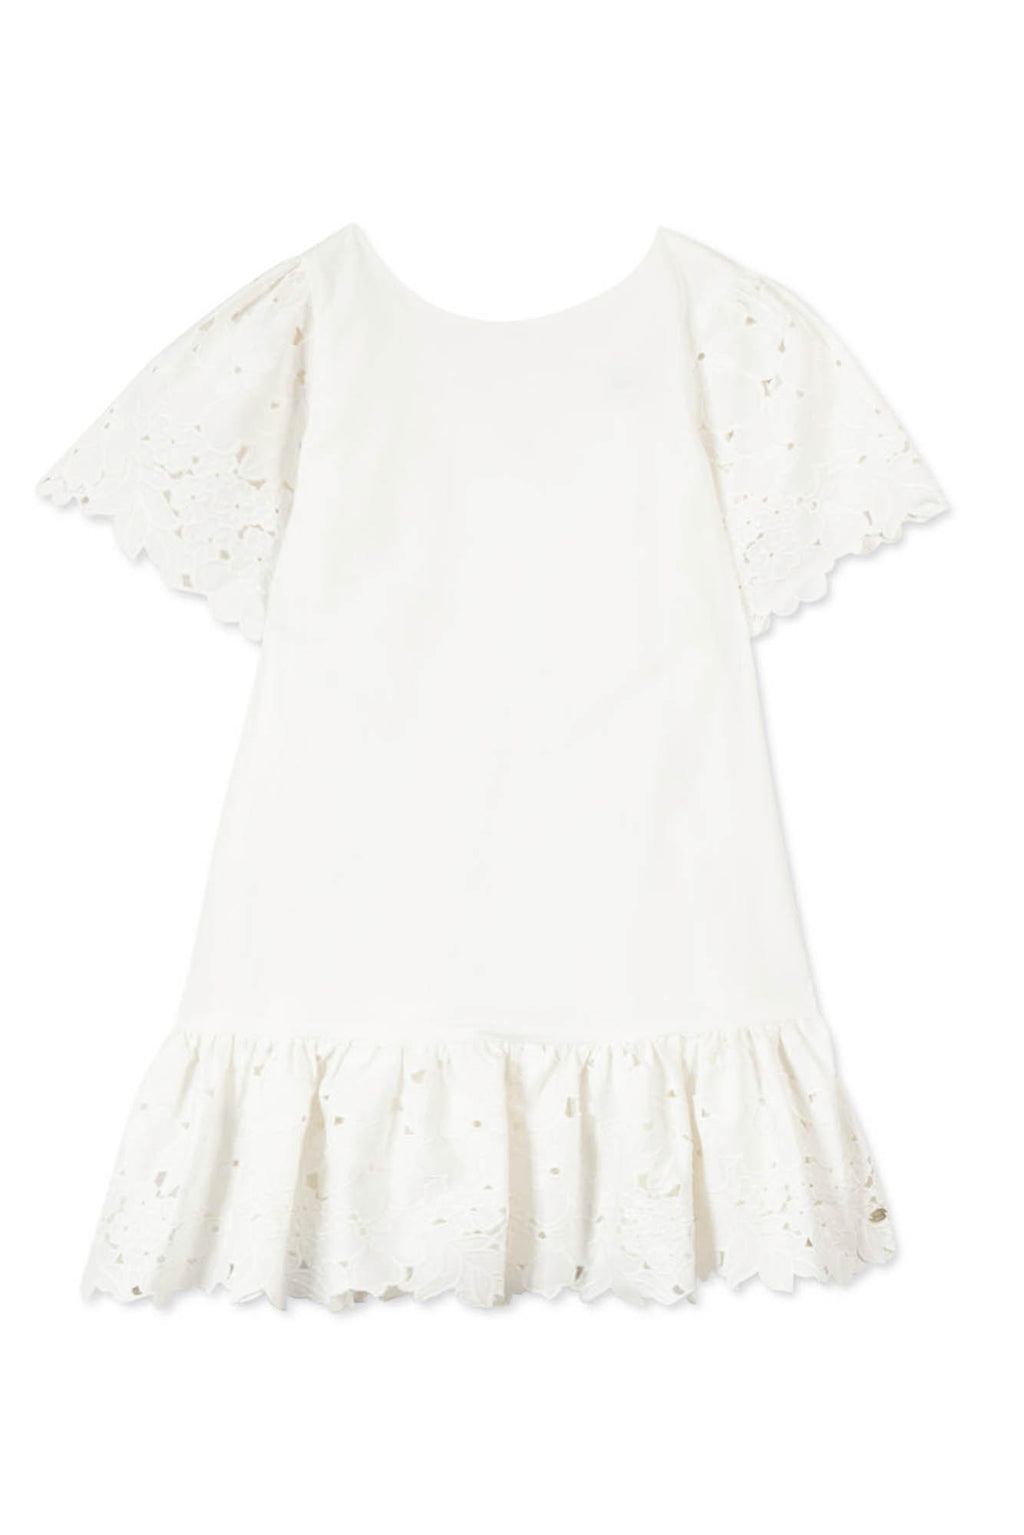 Dress - White Cotton embroidery